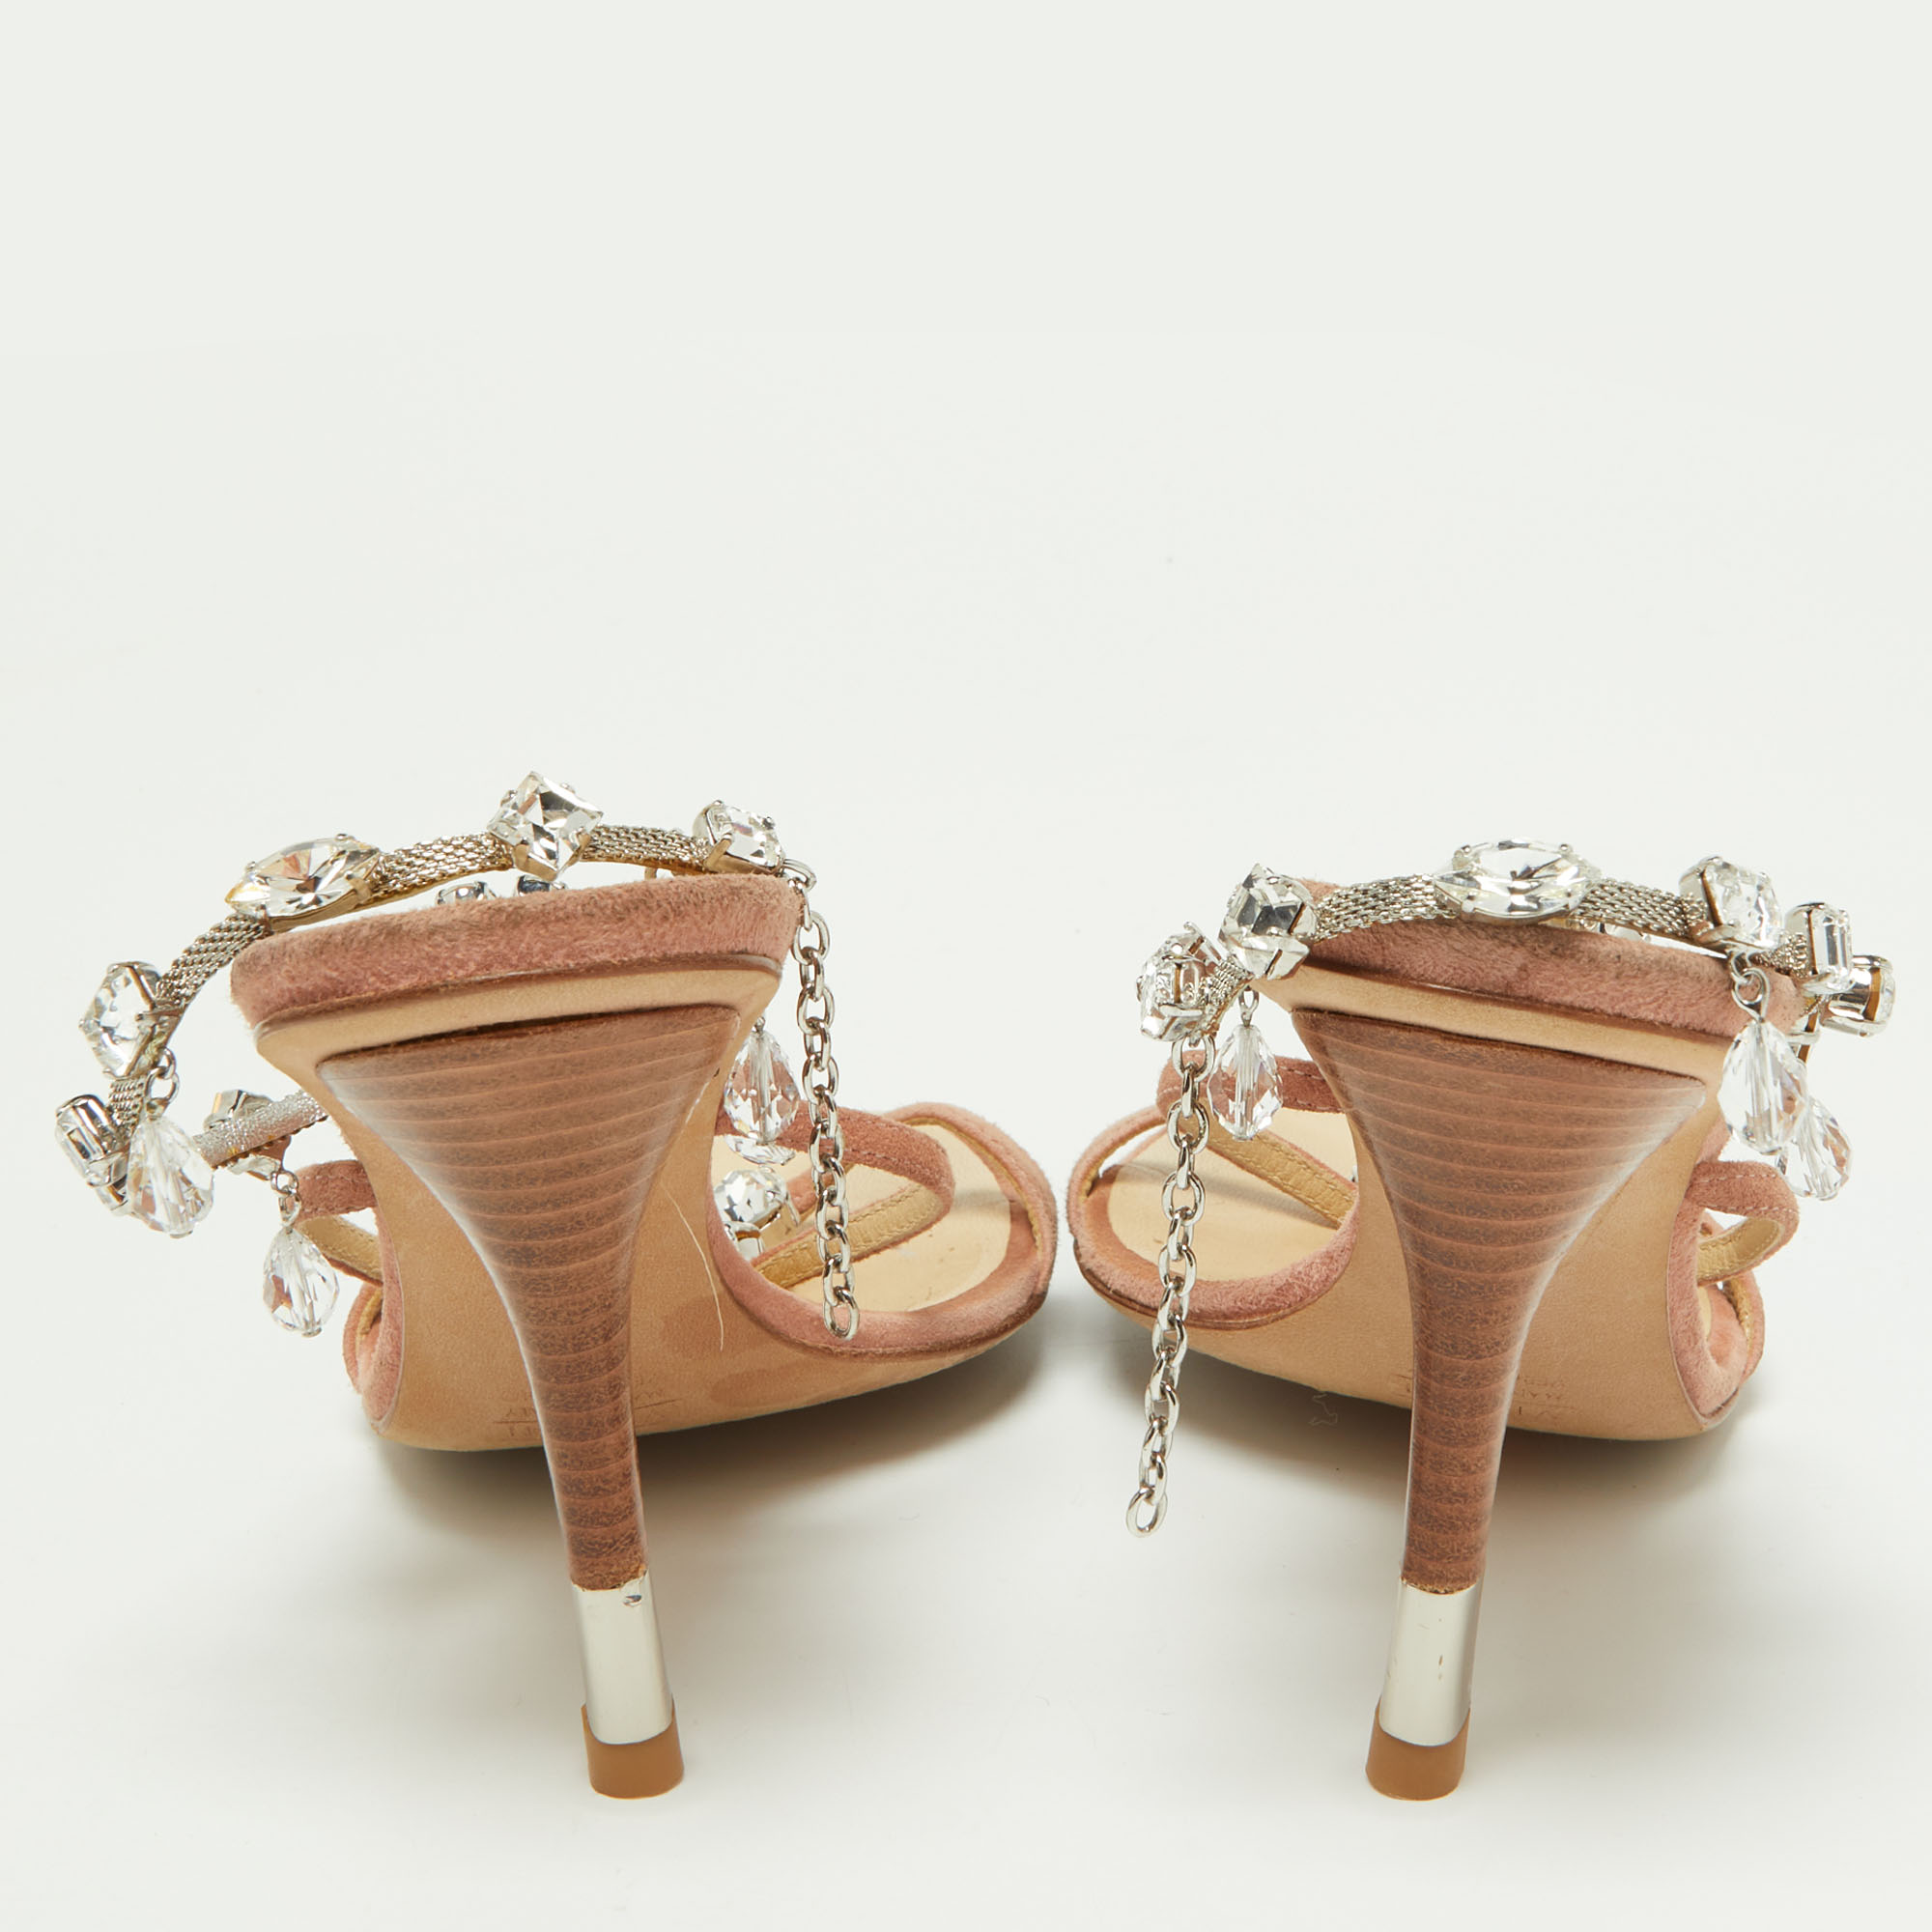 Giuseppe Zanotti Pink Suede Crystal Embellished Ankle Strap Sandals Size 37